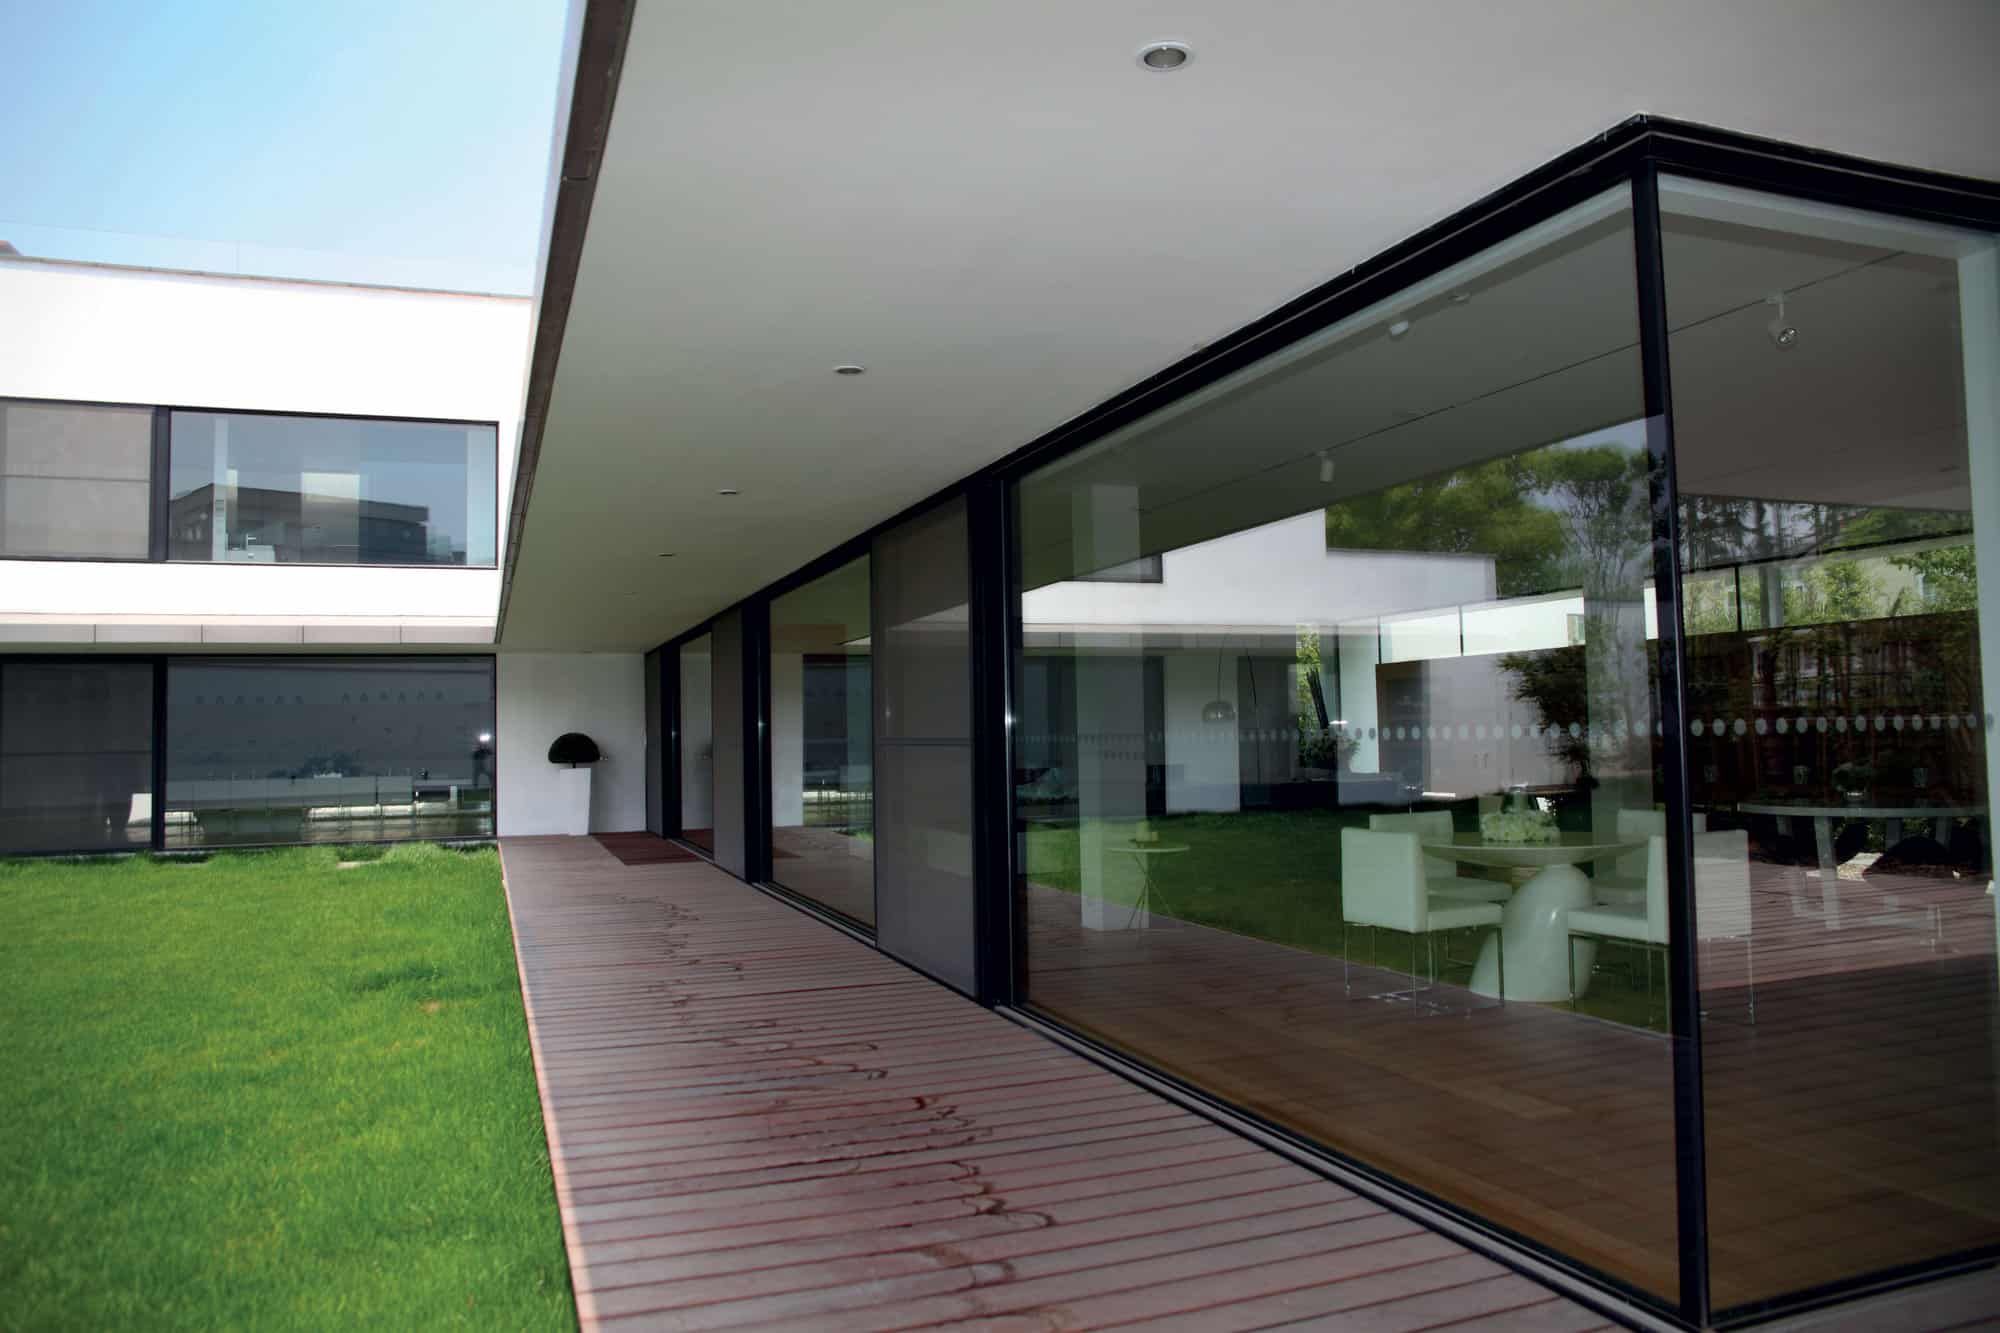 Large-aluminium-windows-bring-tranquil-garden-views-into-this-Shanghai-villa